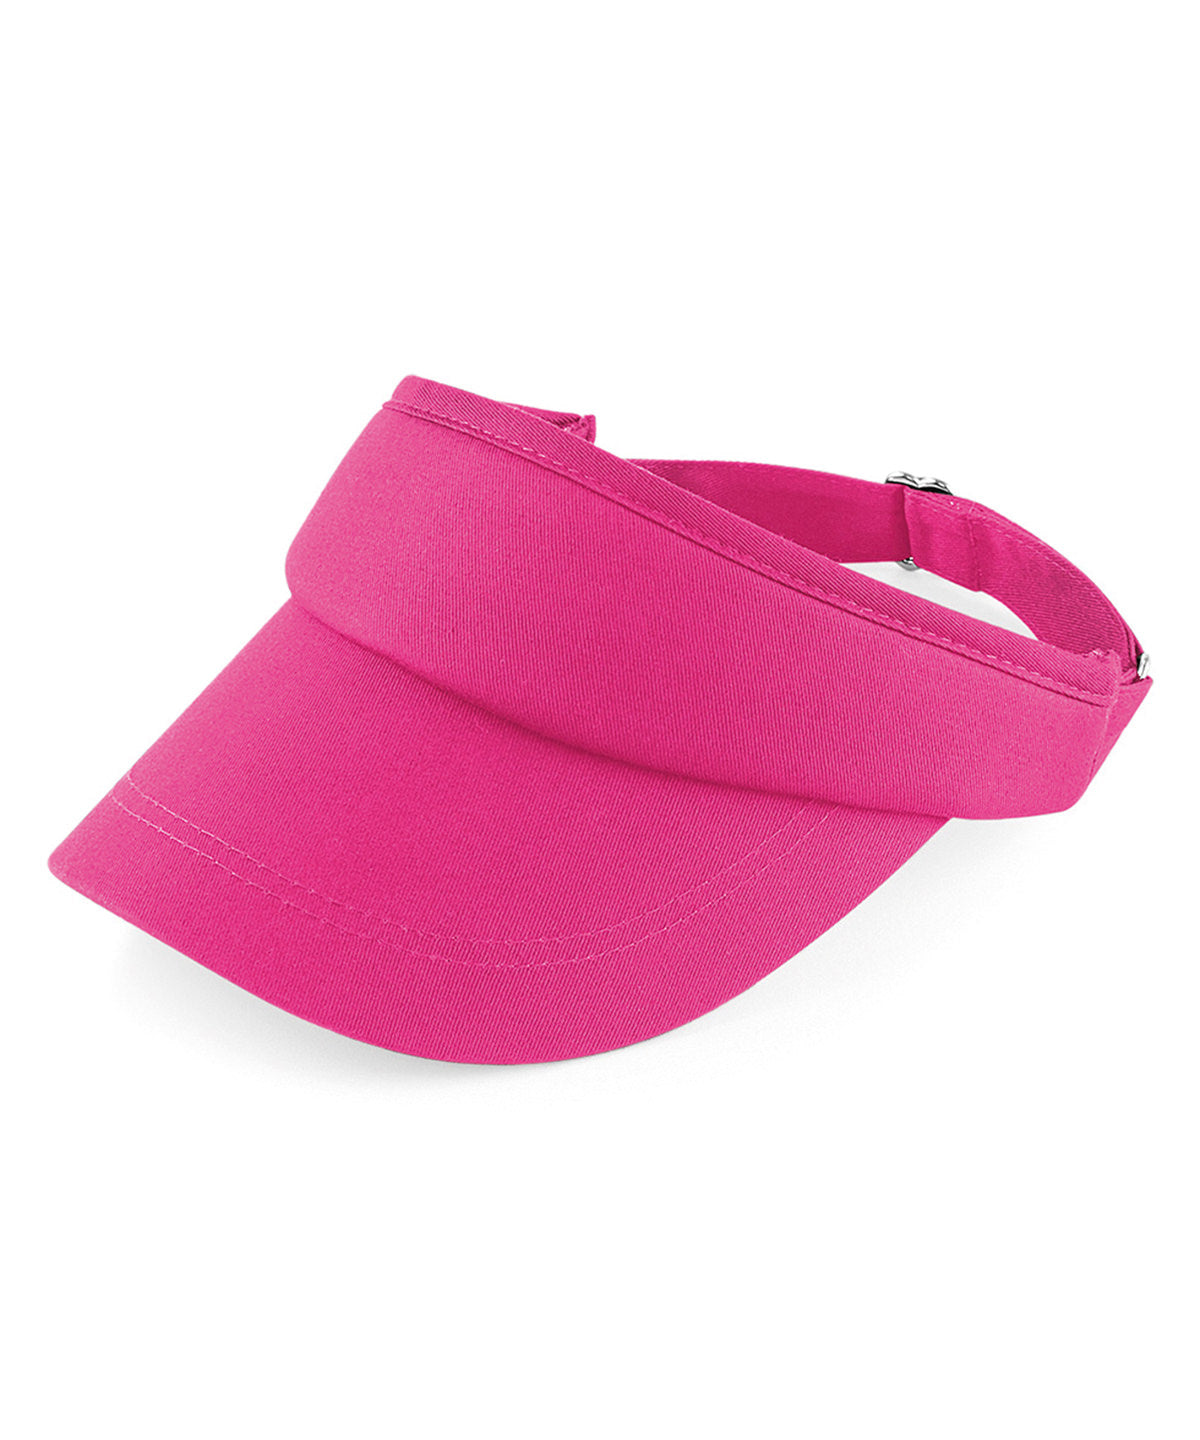 Personalised Caps - Fuchsia Beechfield Sports visor